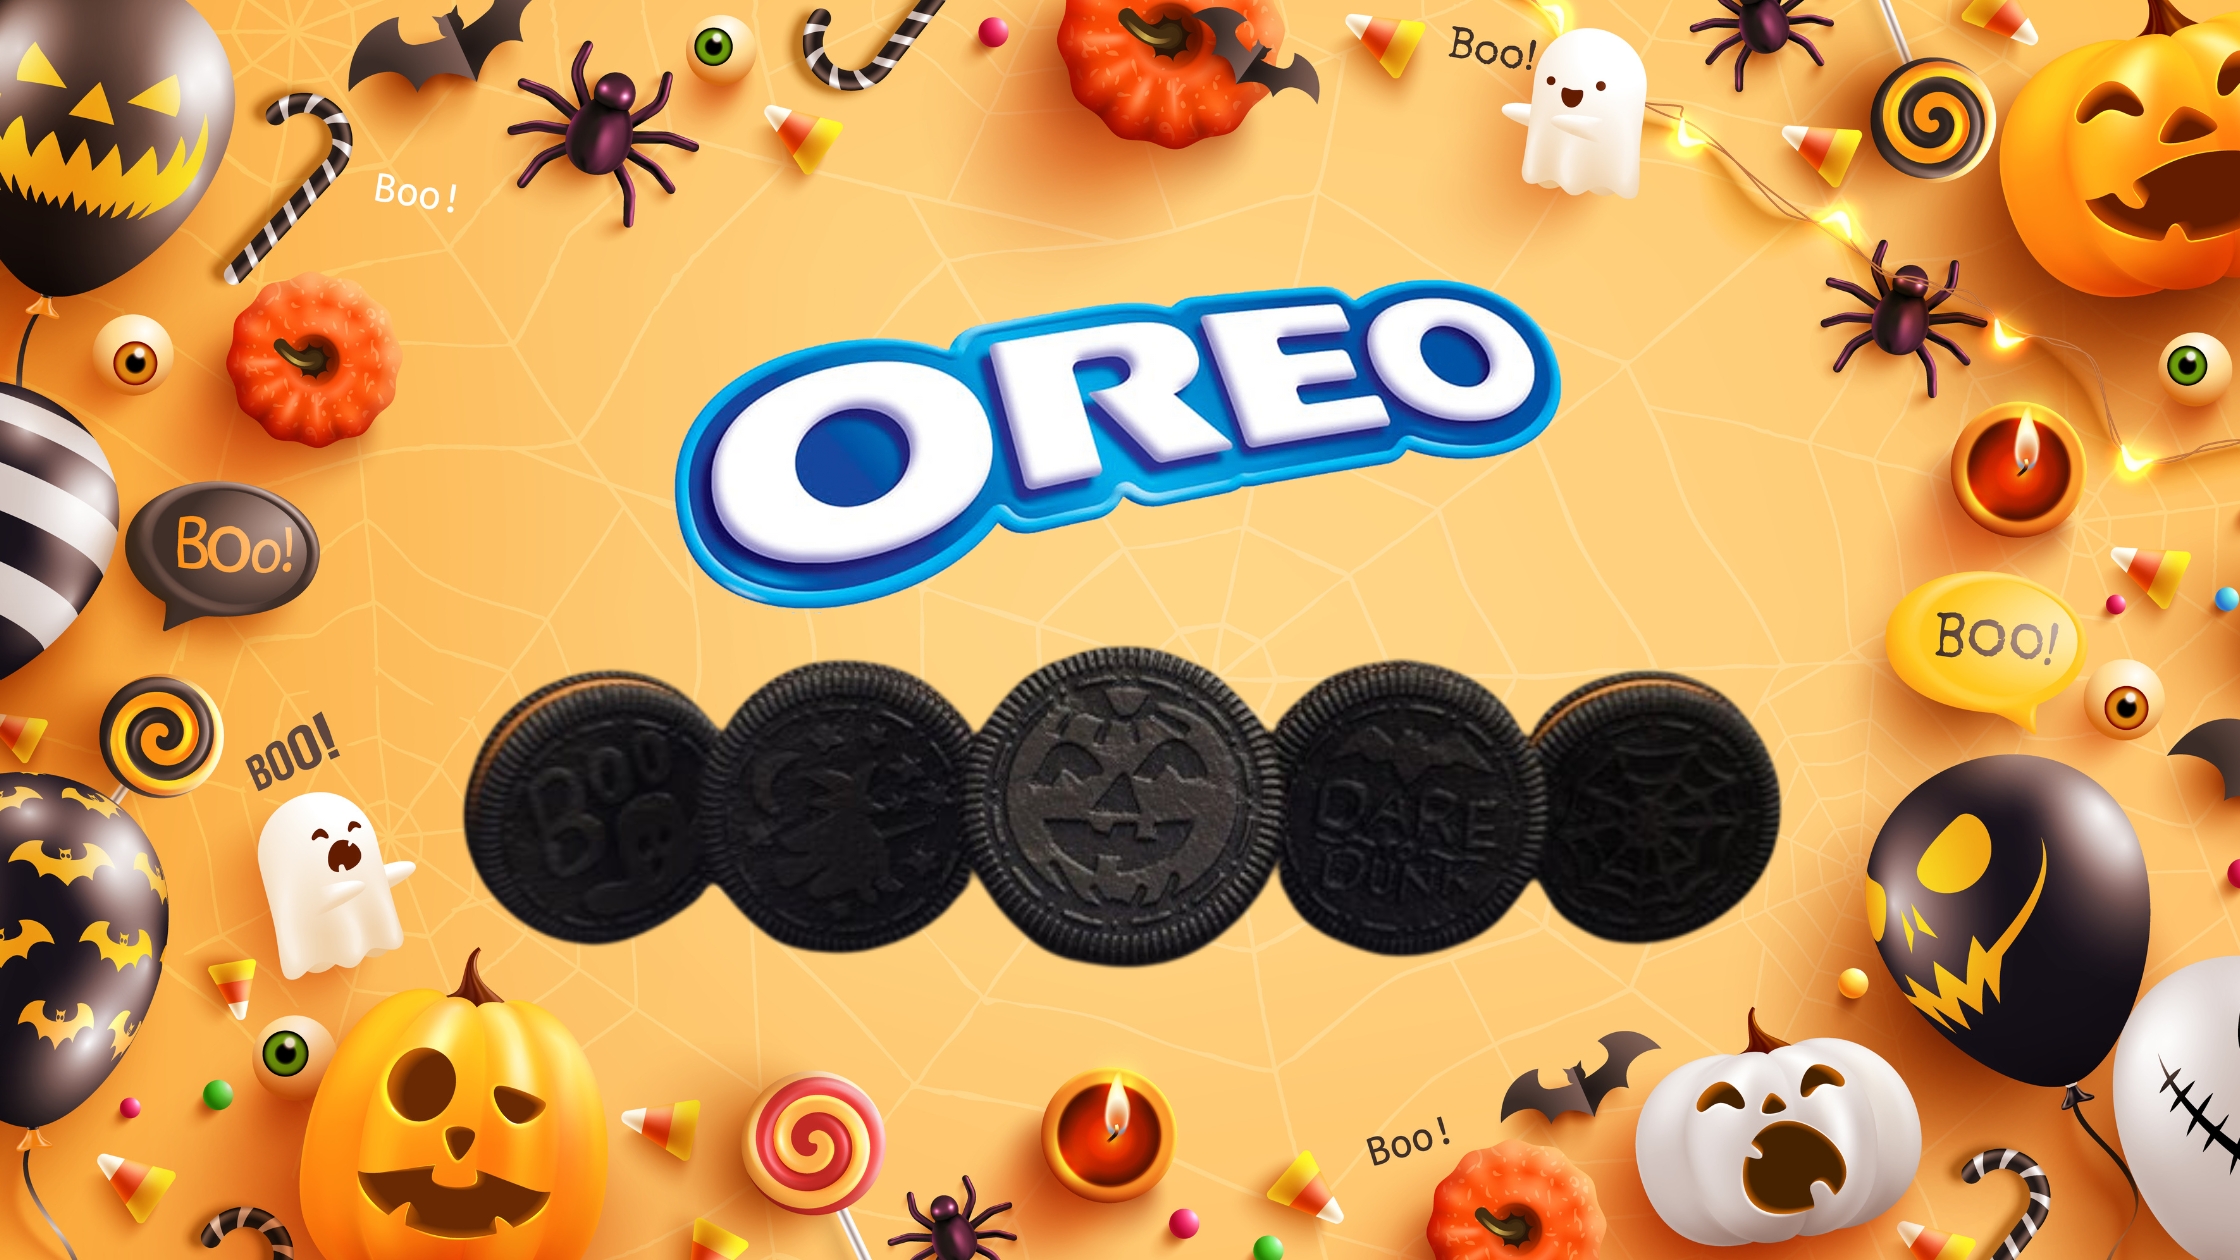 Oreo Unveils Halloween-Themed Boo! Cookies Ahead of Fall